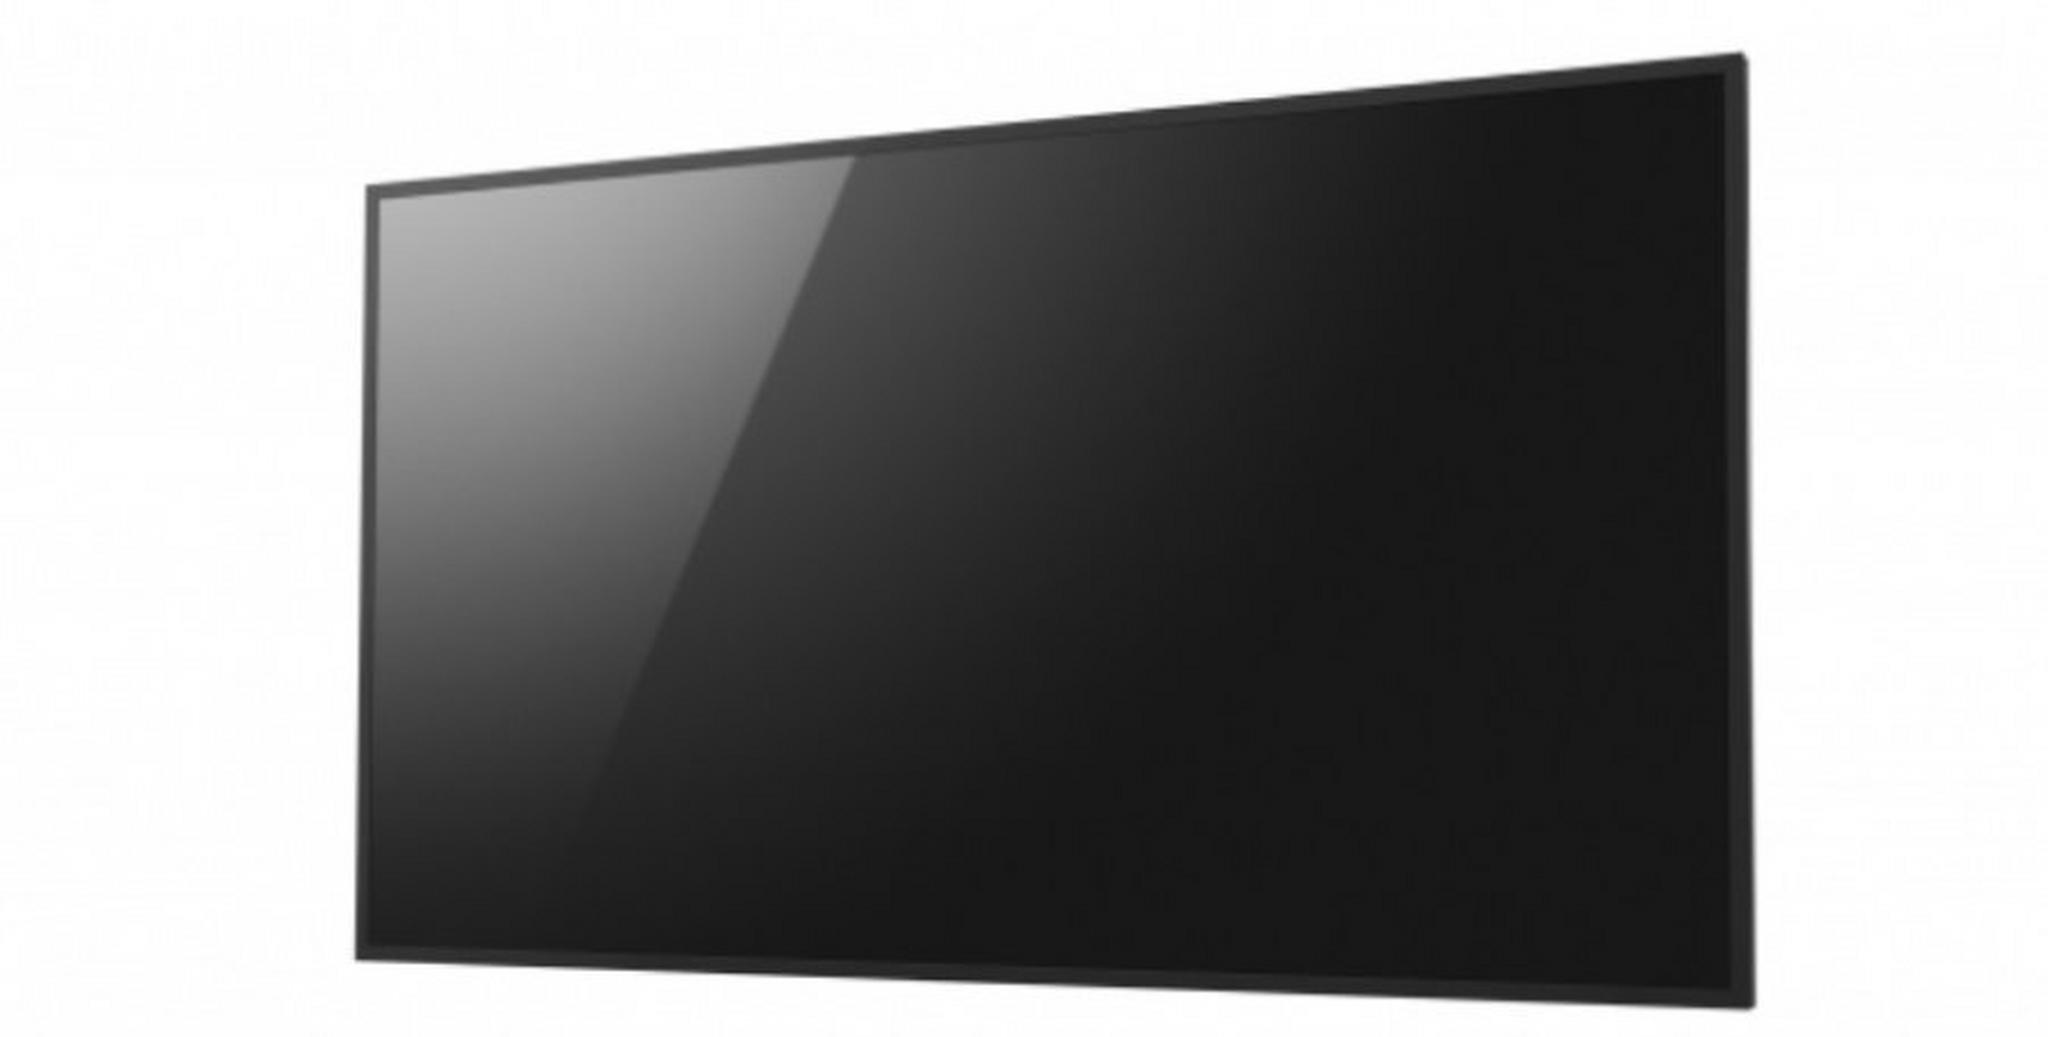 Sony Series BZ40J 100-inch Android 4K LED TV (FW-100BZ40J/B)